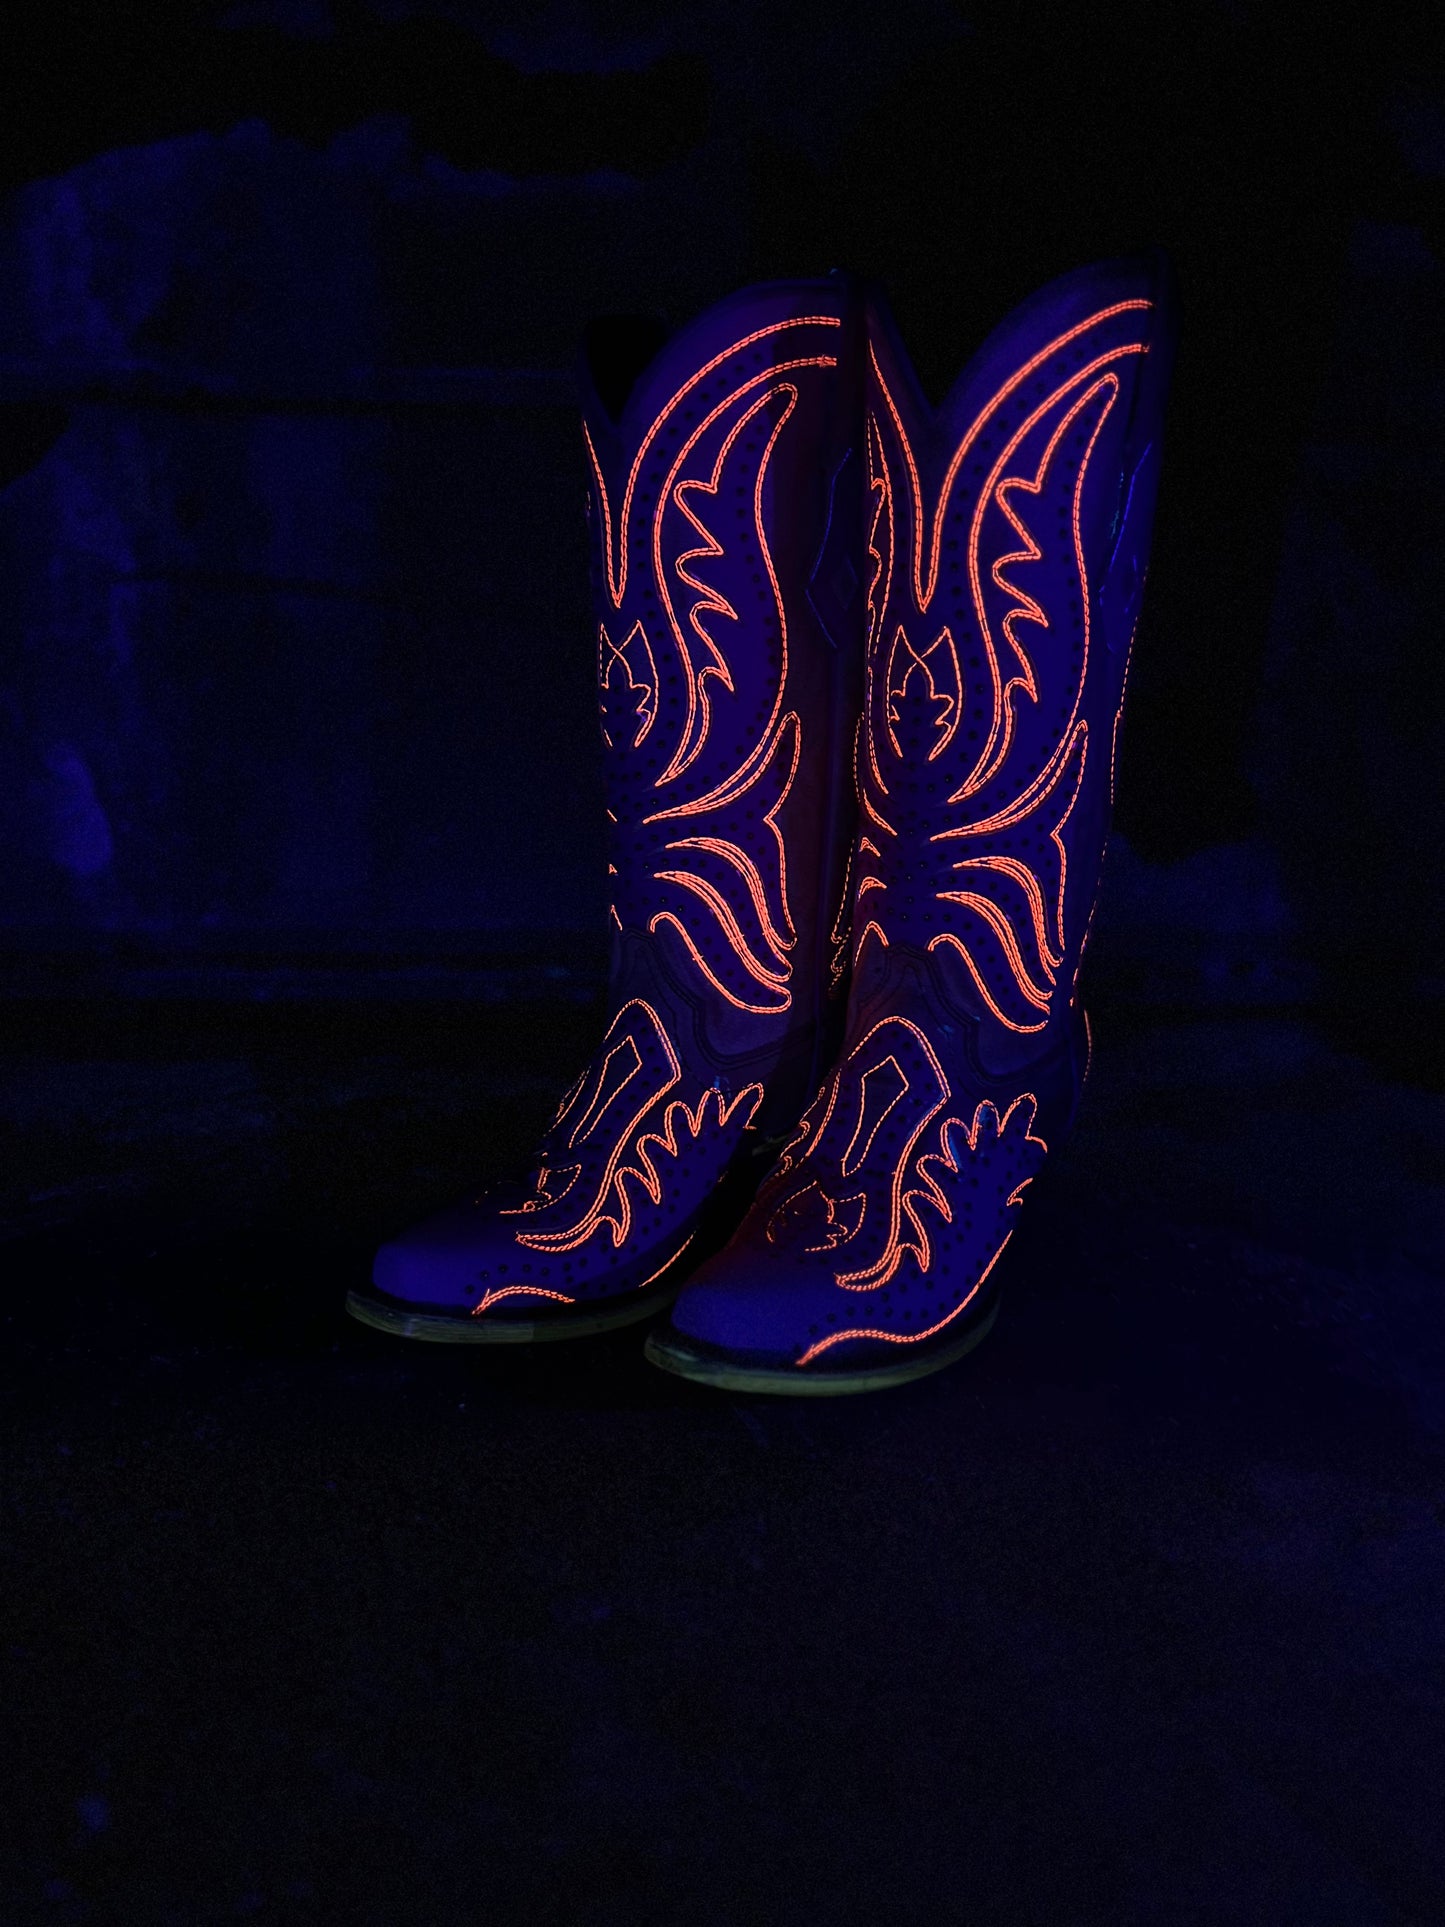 The Vivid Neon Black Light Boots